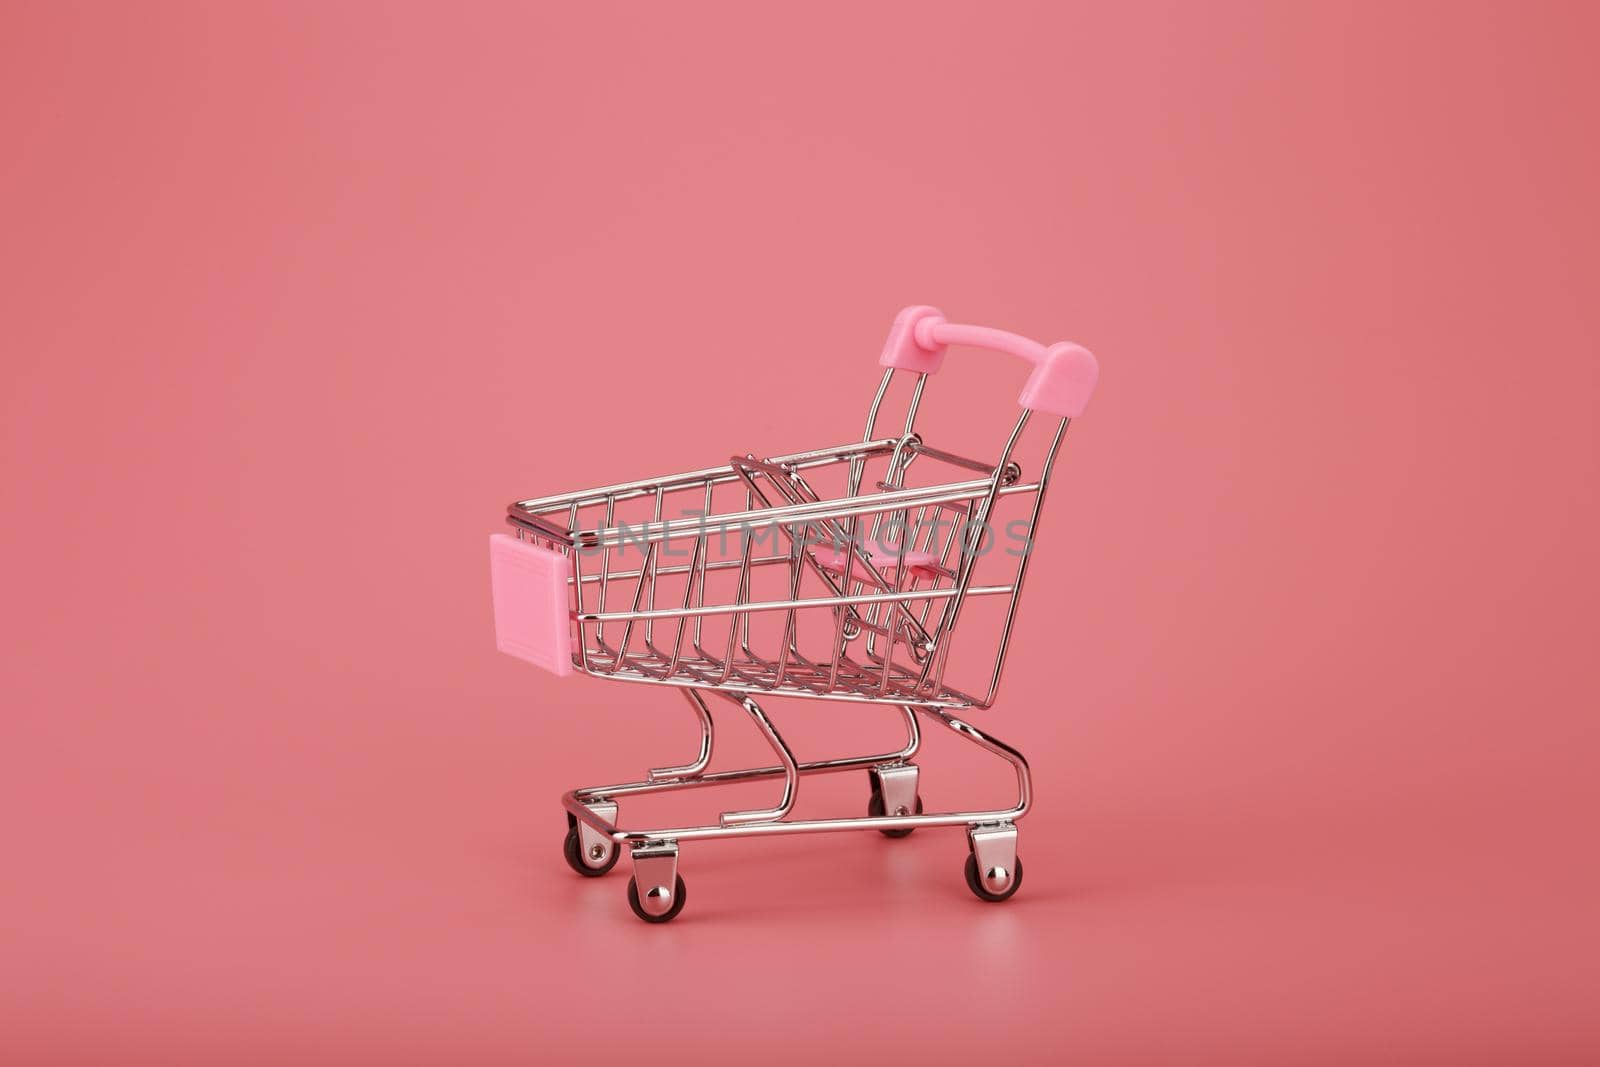 Shopping cart on pink background by Senorina_Irina